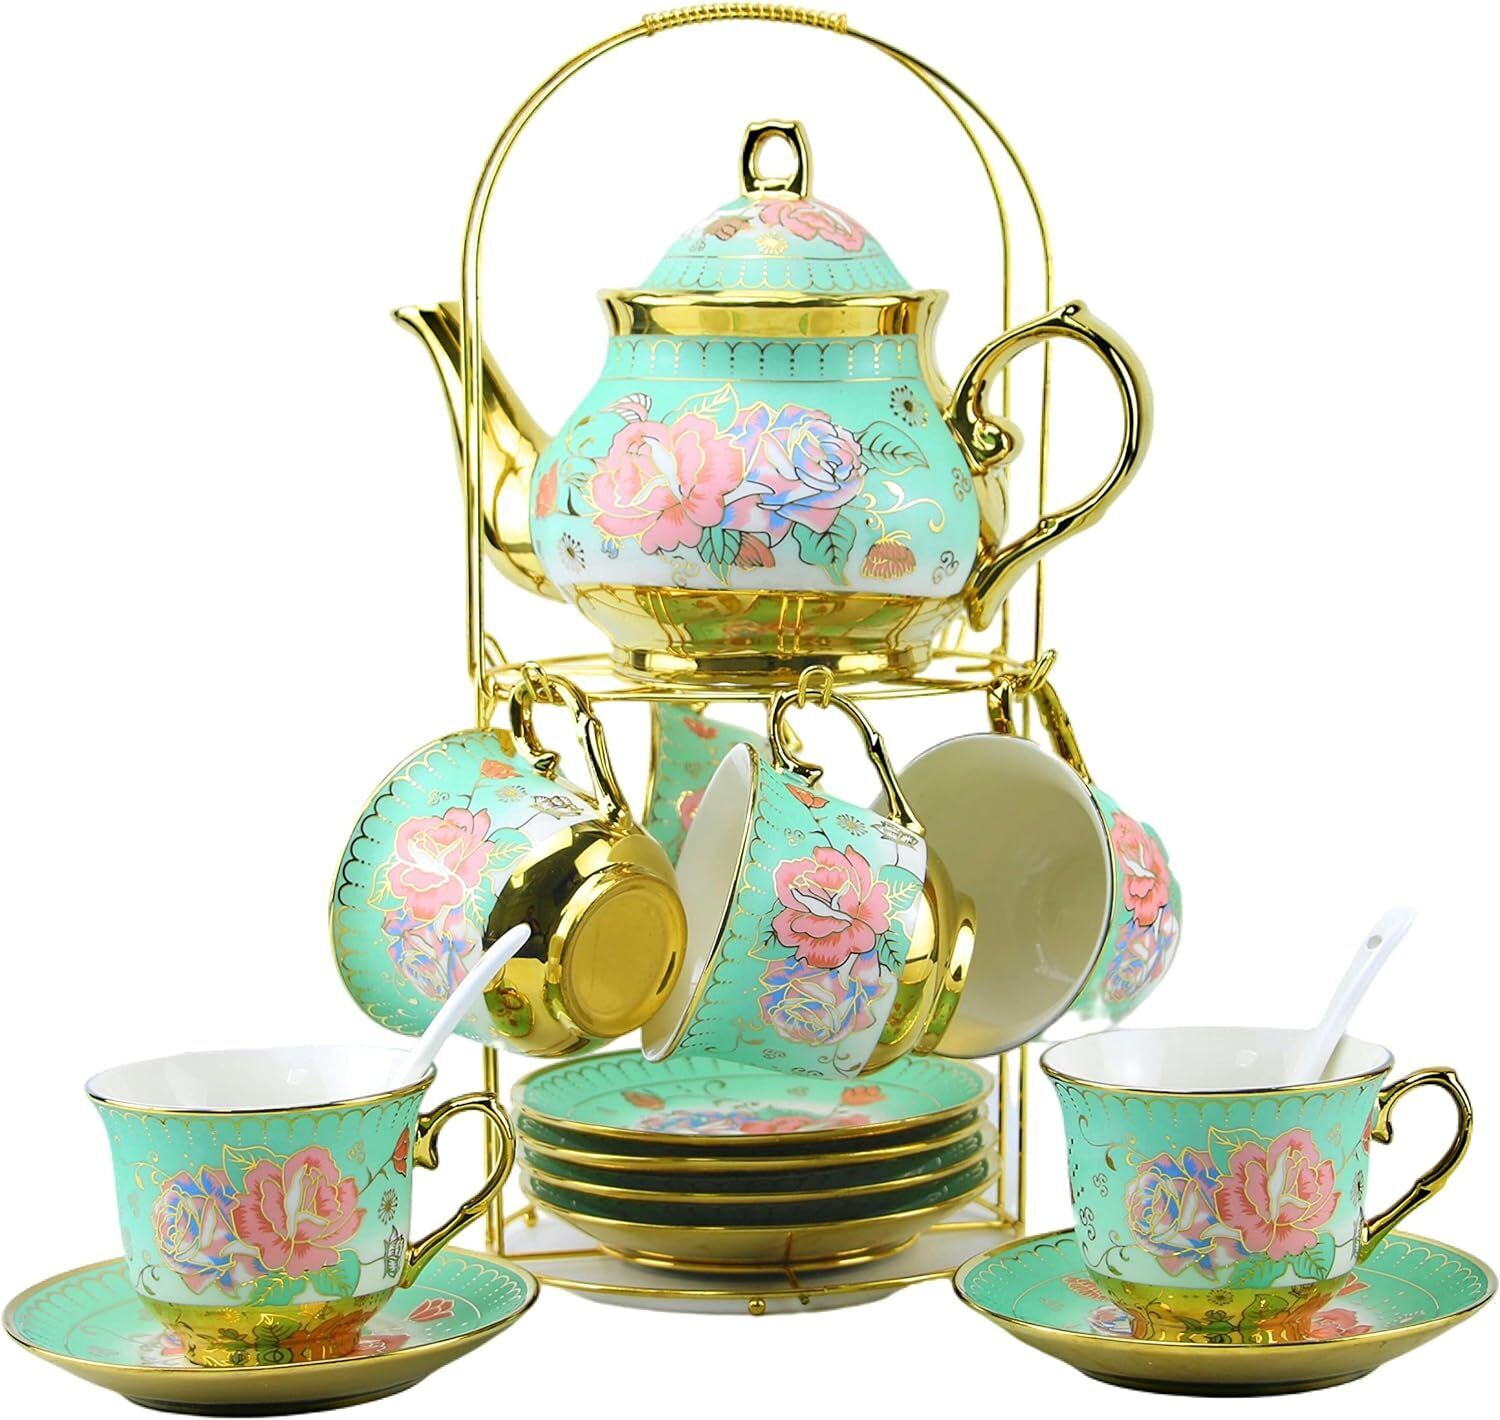 20 Pieces Porcelain Tea Set With Metal Holder, European Ceramic tea set